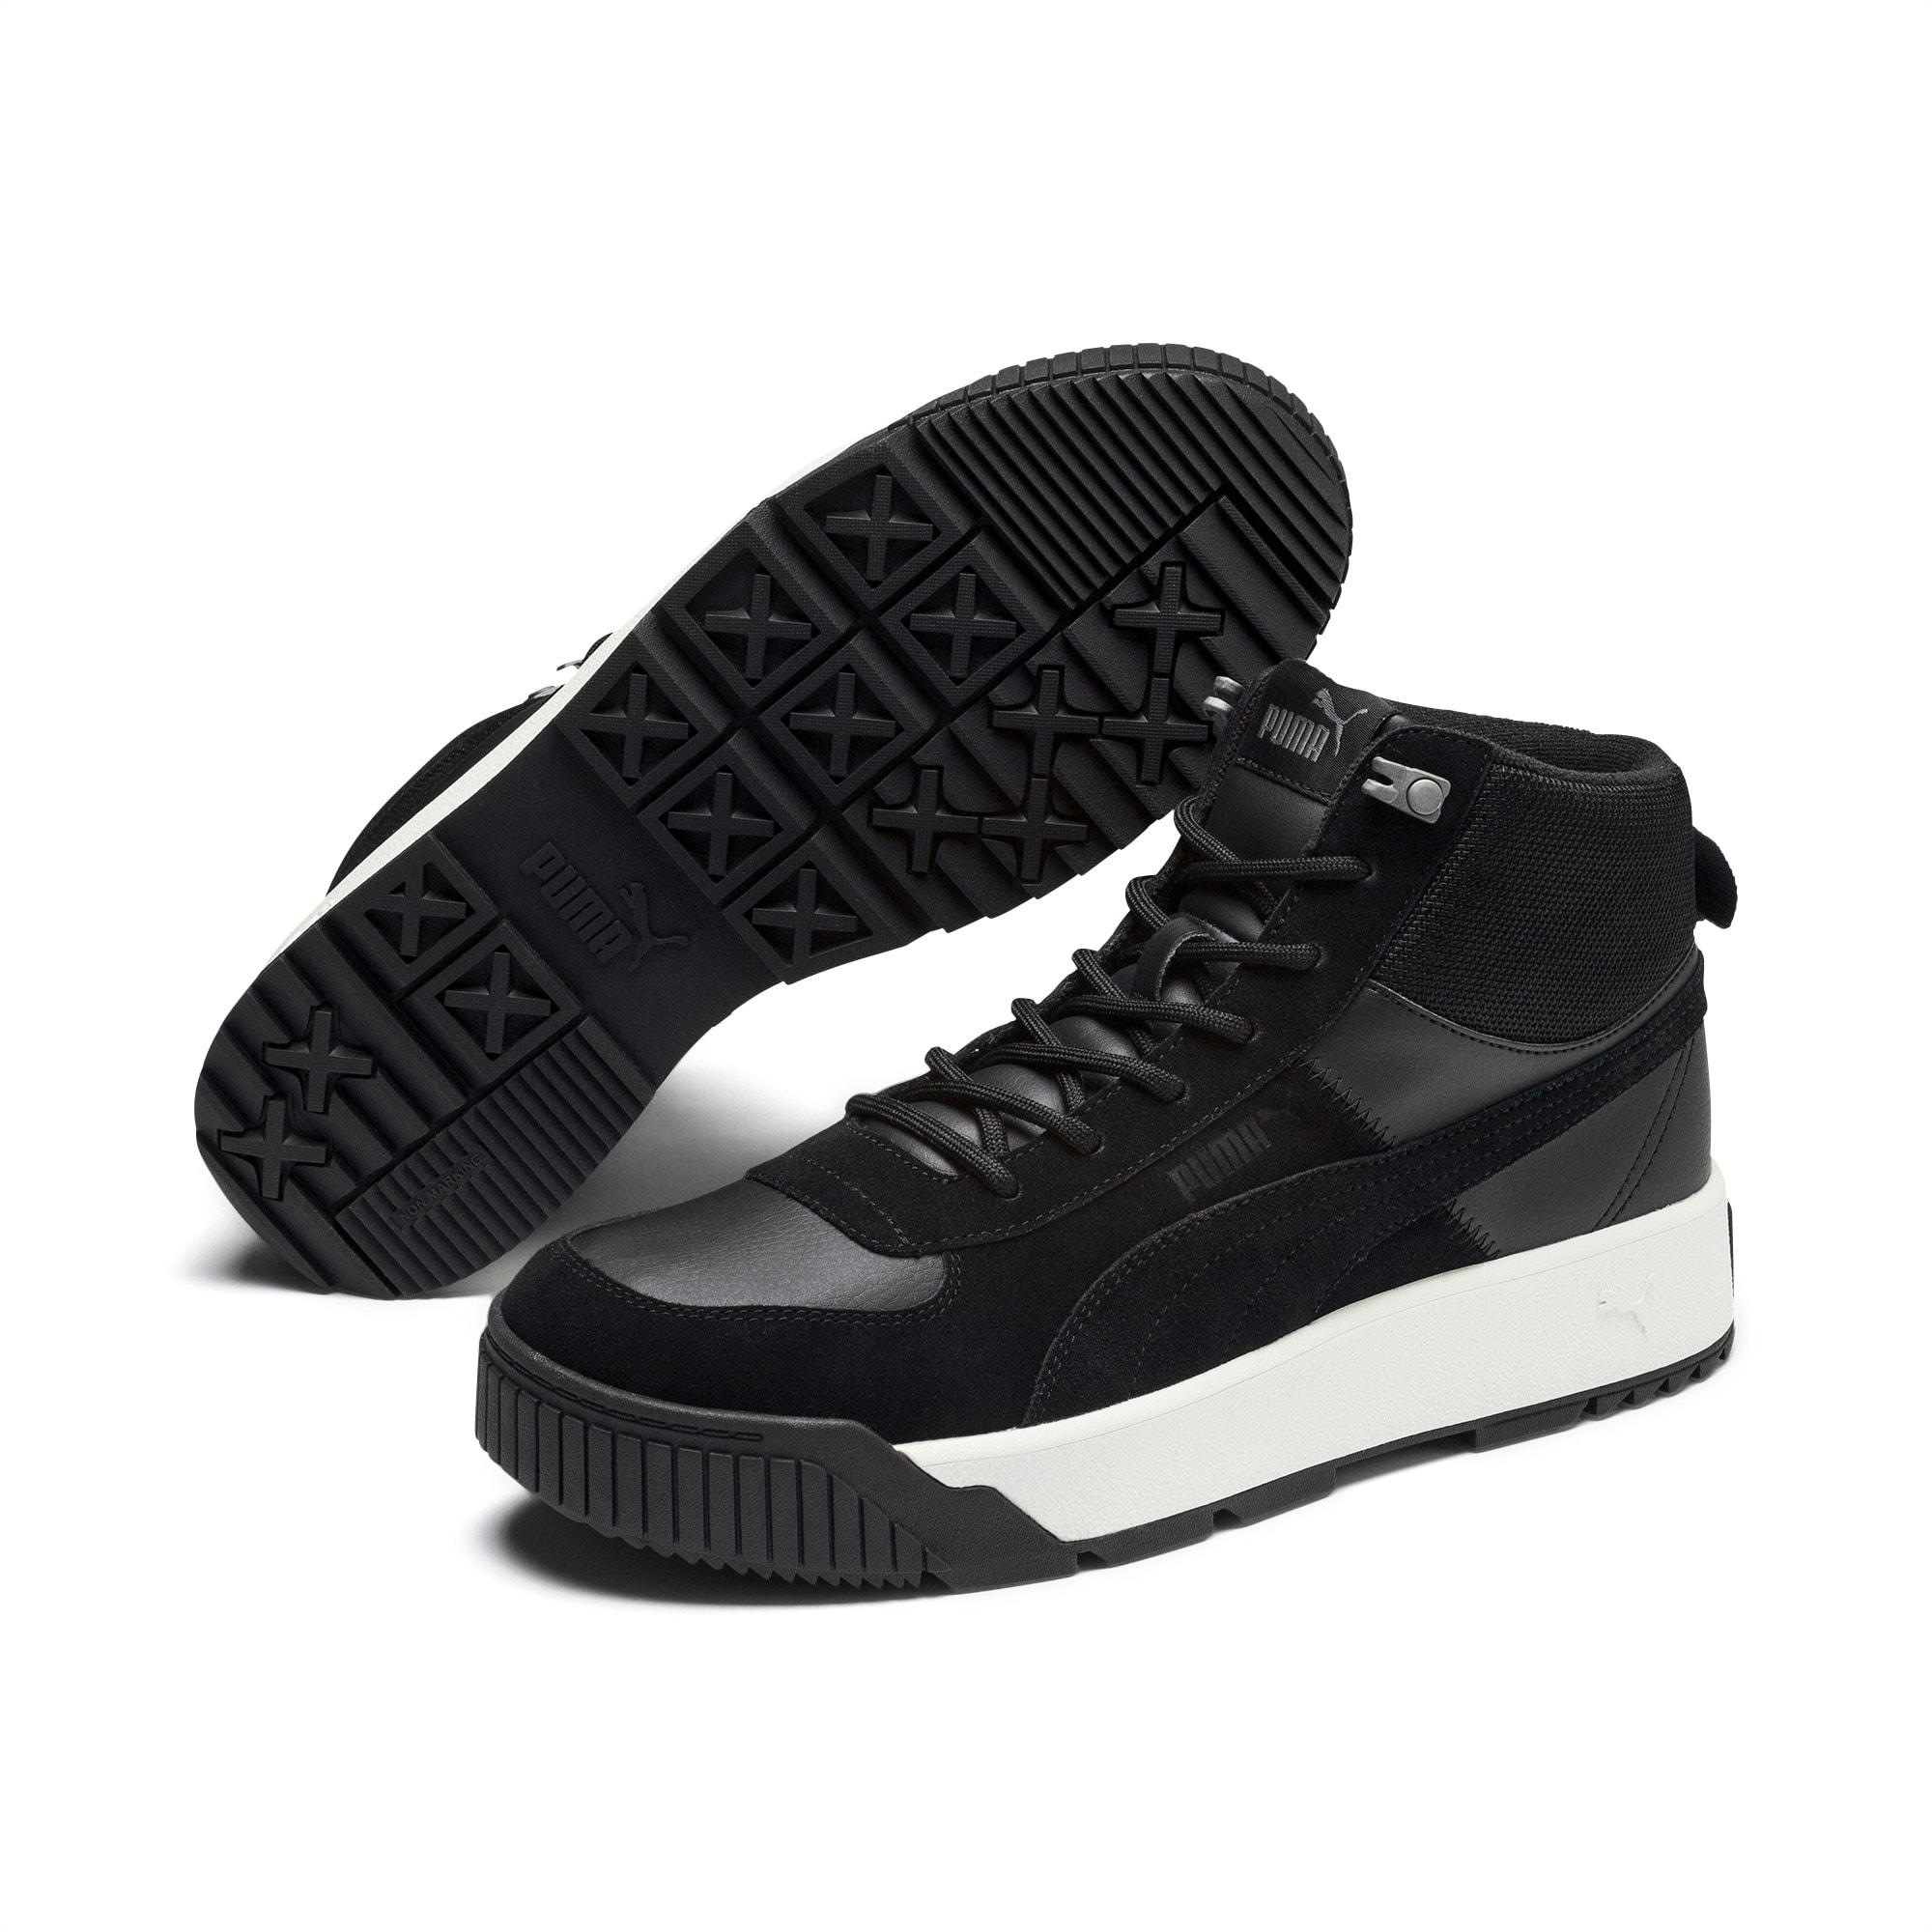 PUMA Leather Tarrenz Sb Men's Sneakers in 01 (Black) - Lyst